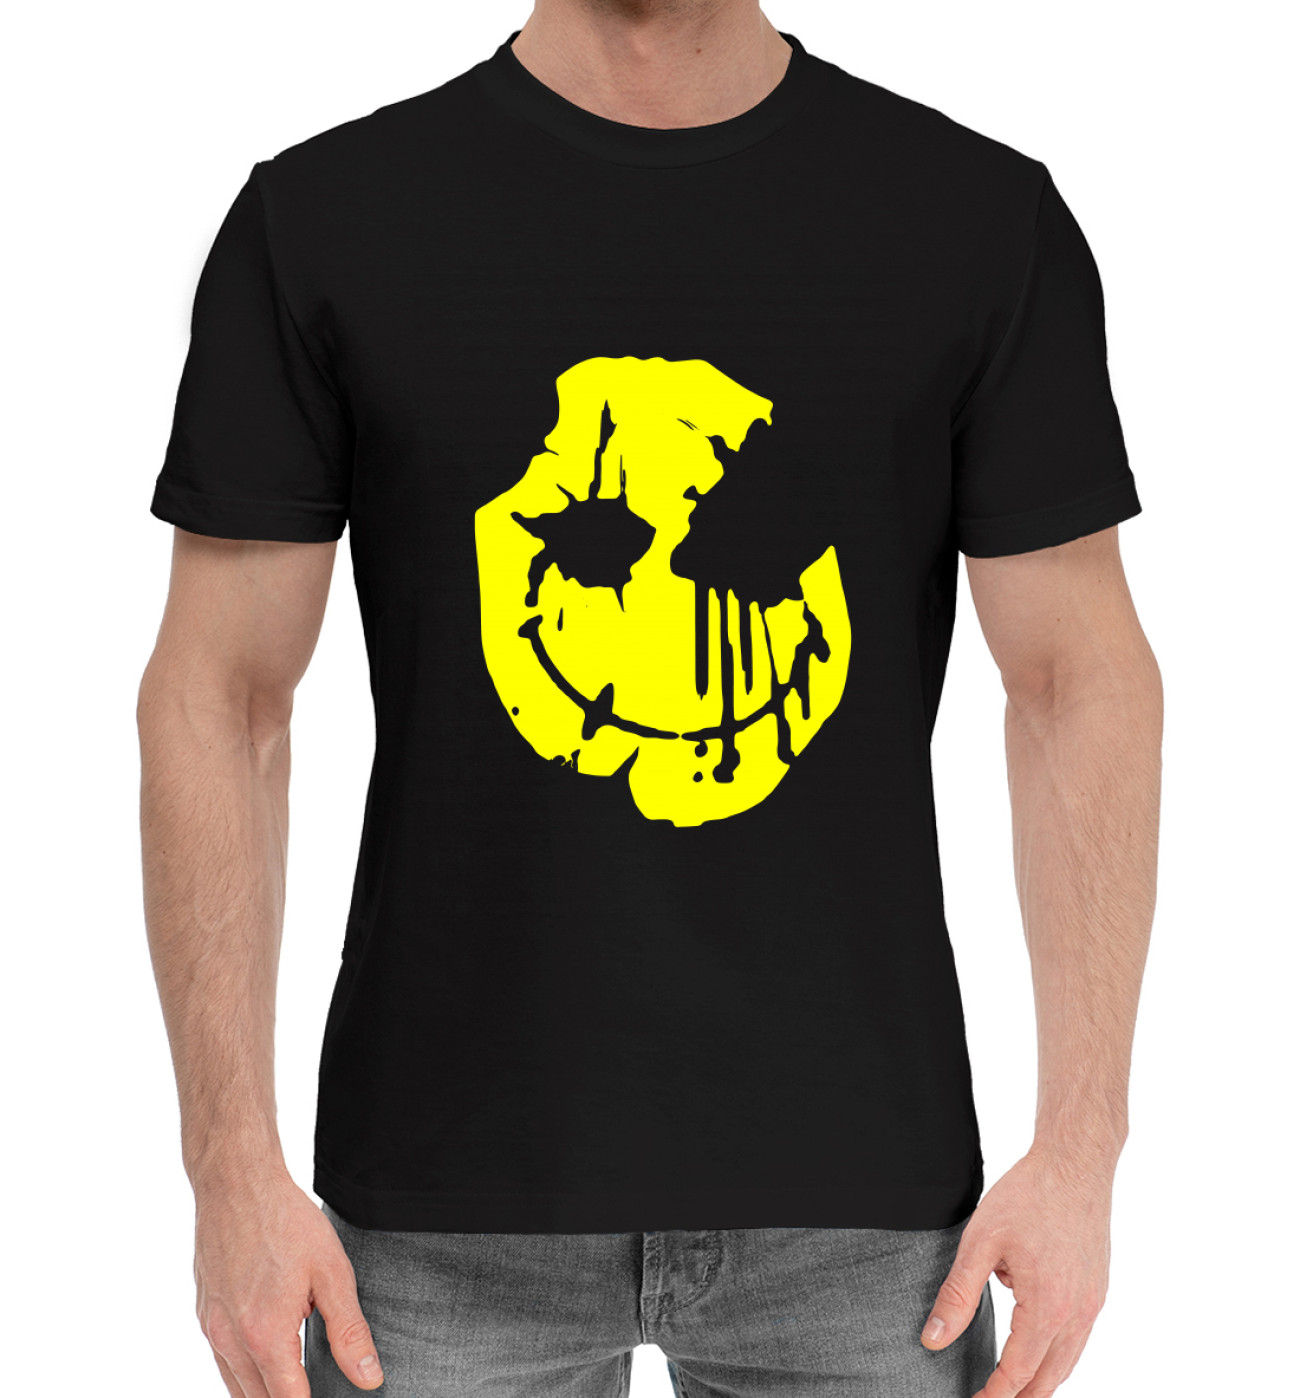 Мужская Хлопковая футболка Rockstar Games, артикул: ROC-265998-hfu-2